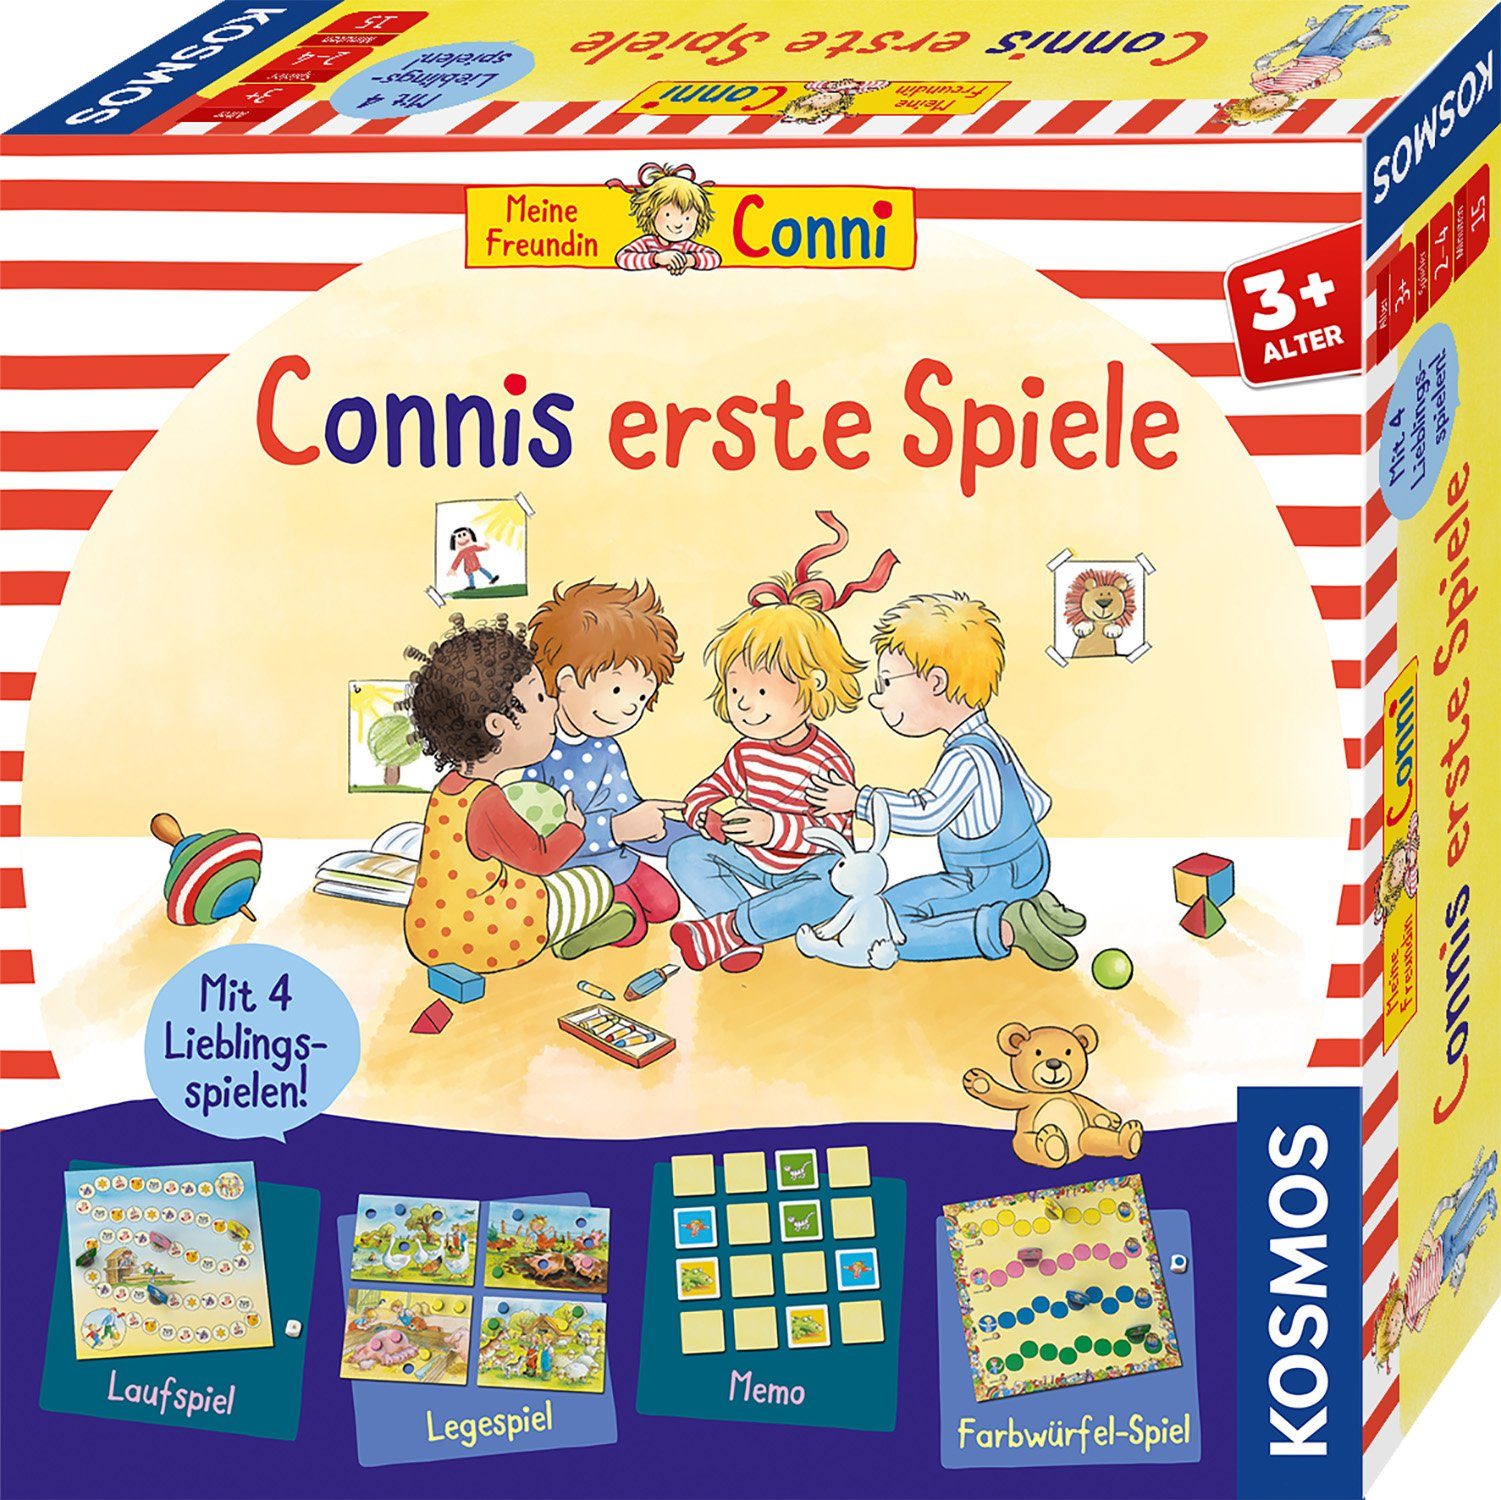 Kosmos Ігриsammlung, Kinderspiel Connis erste Ігри, Made in Germany